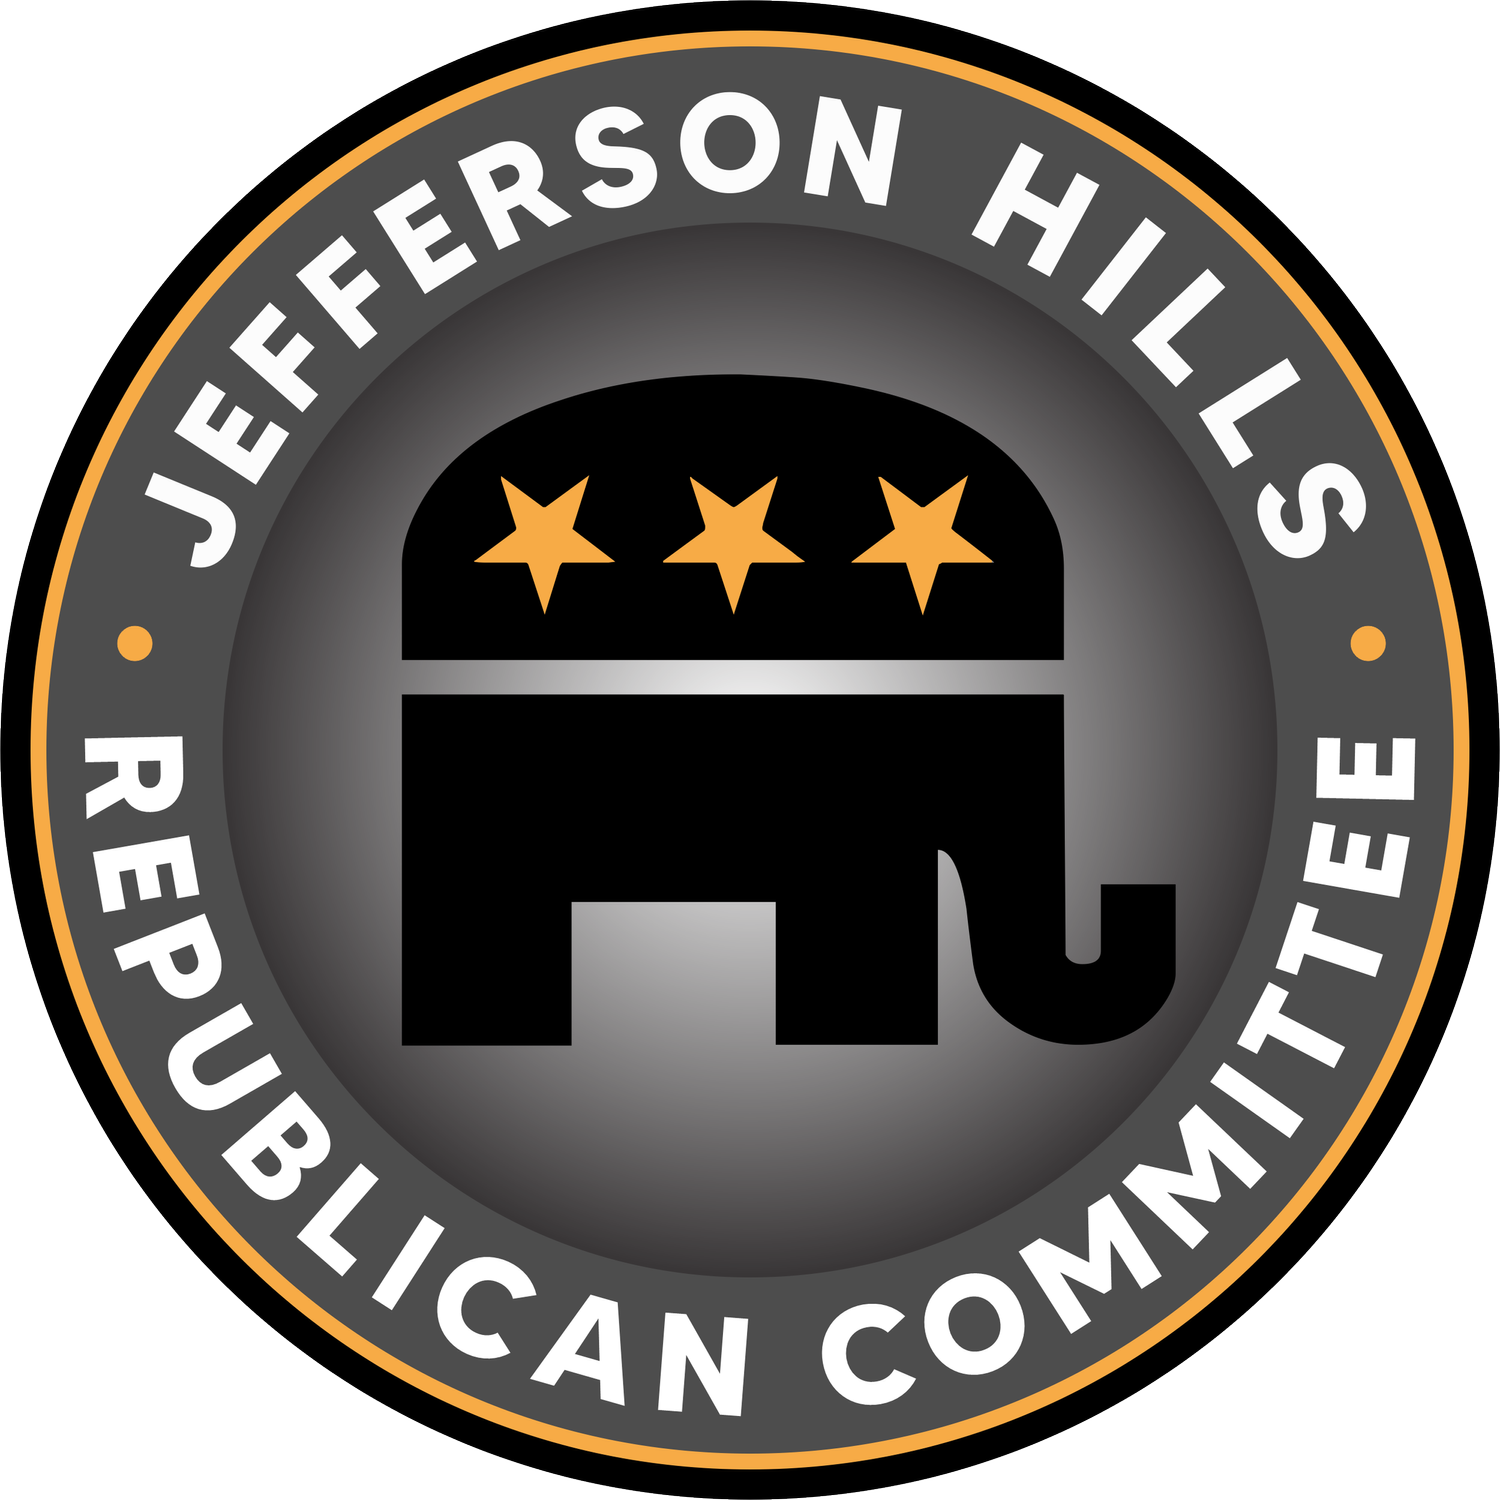 Jefferson Hills Republican Committee